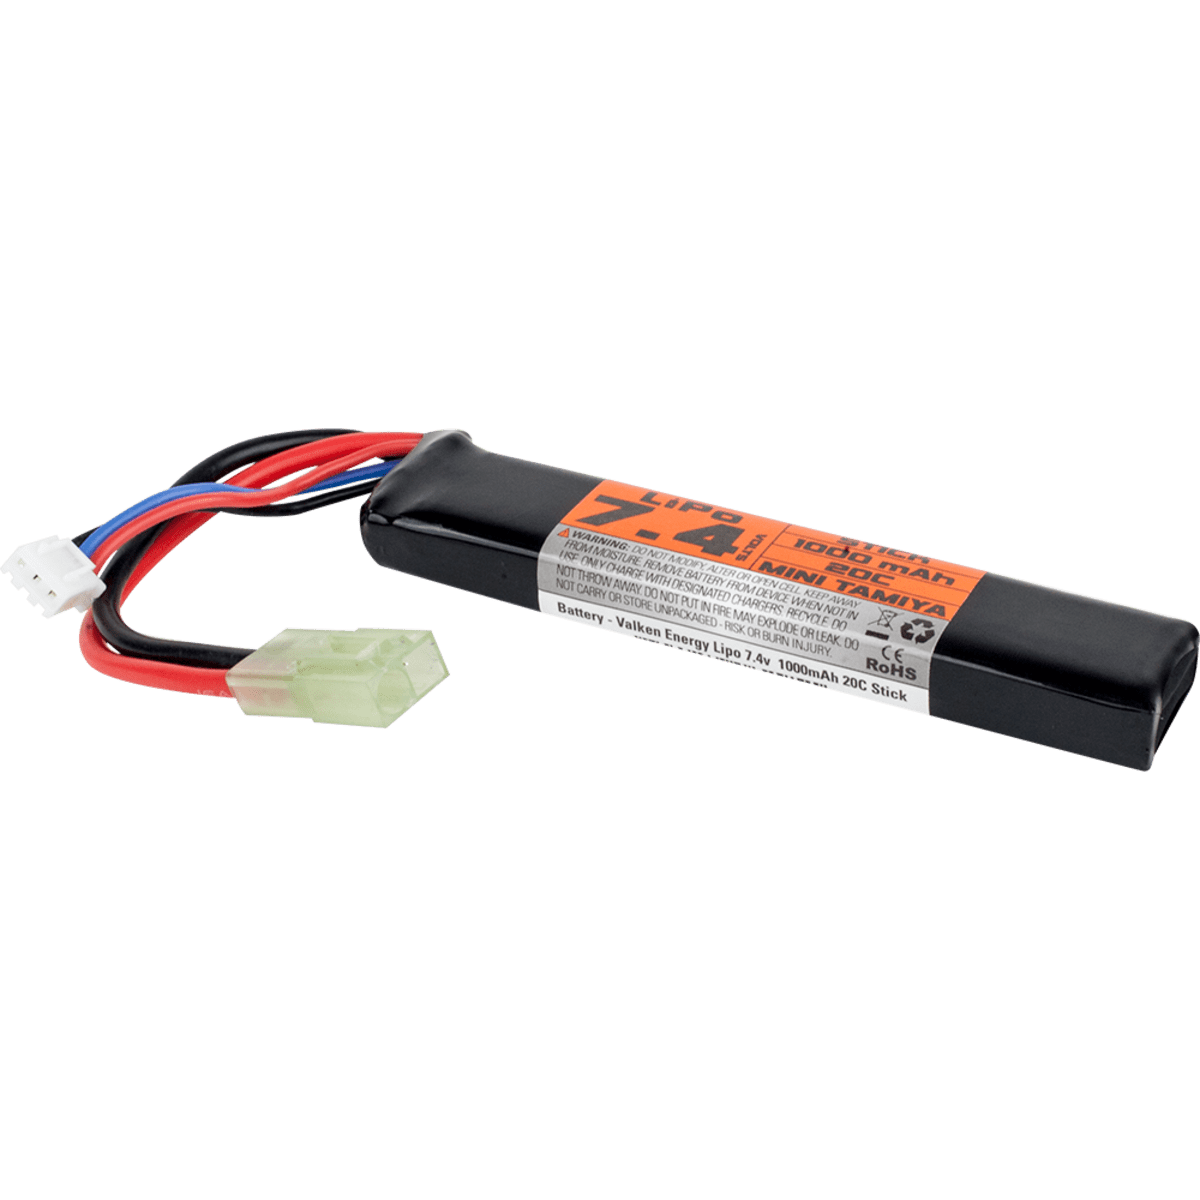 Valken LiPo Battery - 7.4v 1000mAh 30c Stick / Tamiya - Eminent Paintball And Airsoft